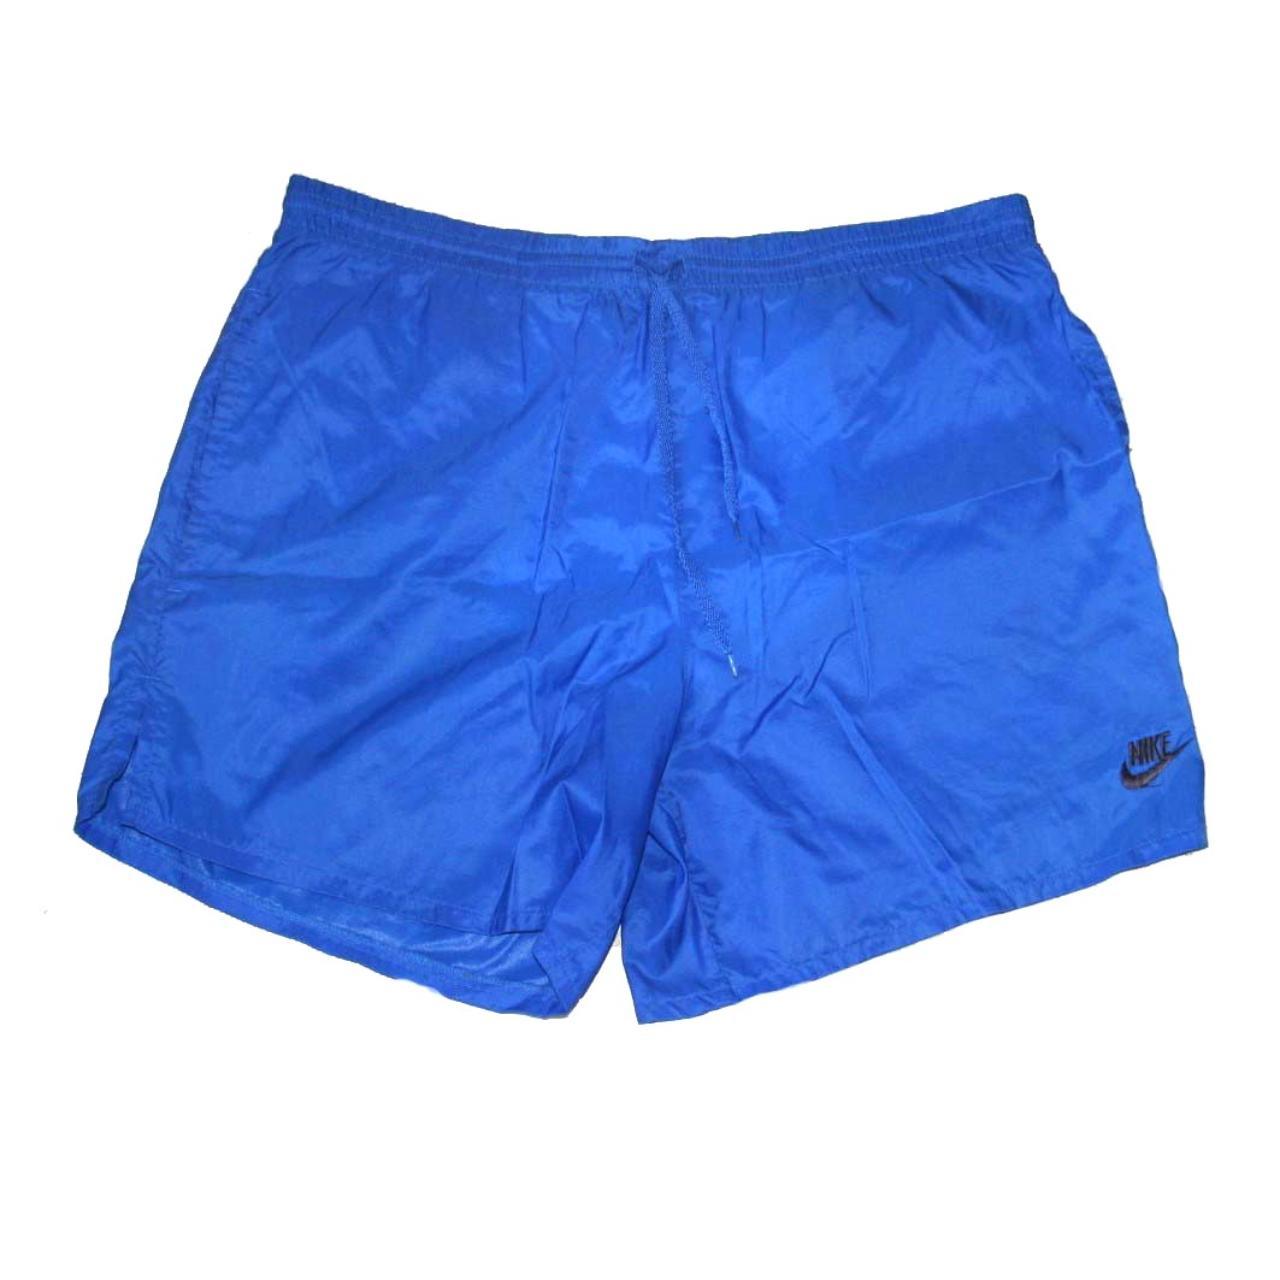 Nike '90s blue swim shorts Size Medium 100%... - Depop